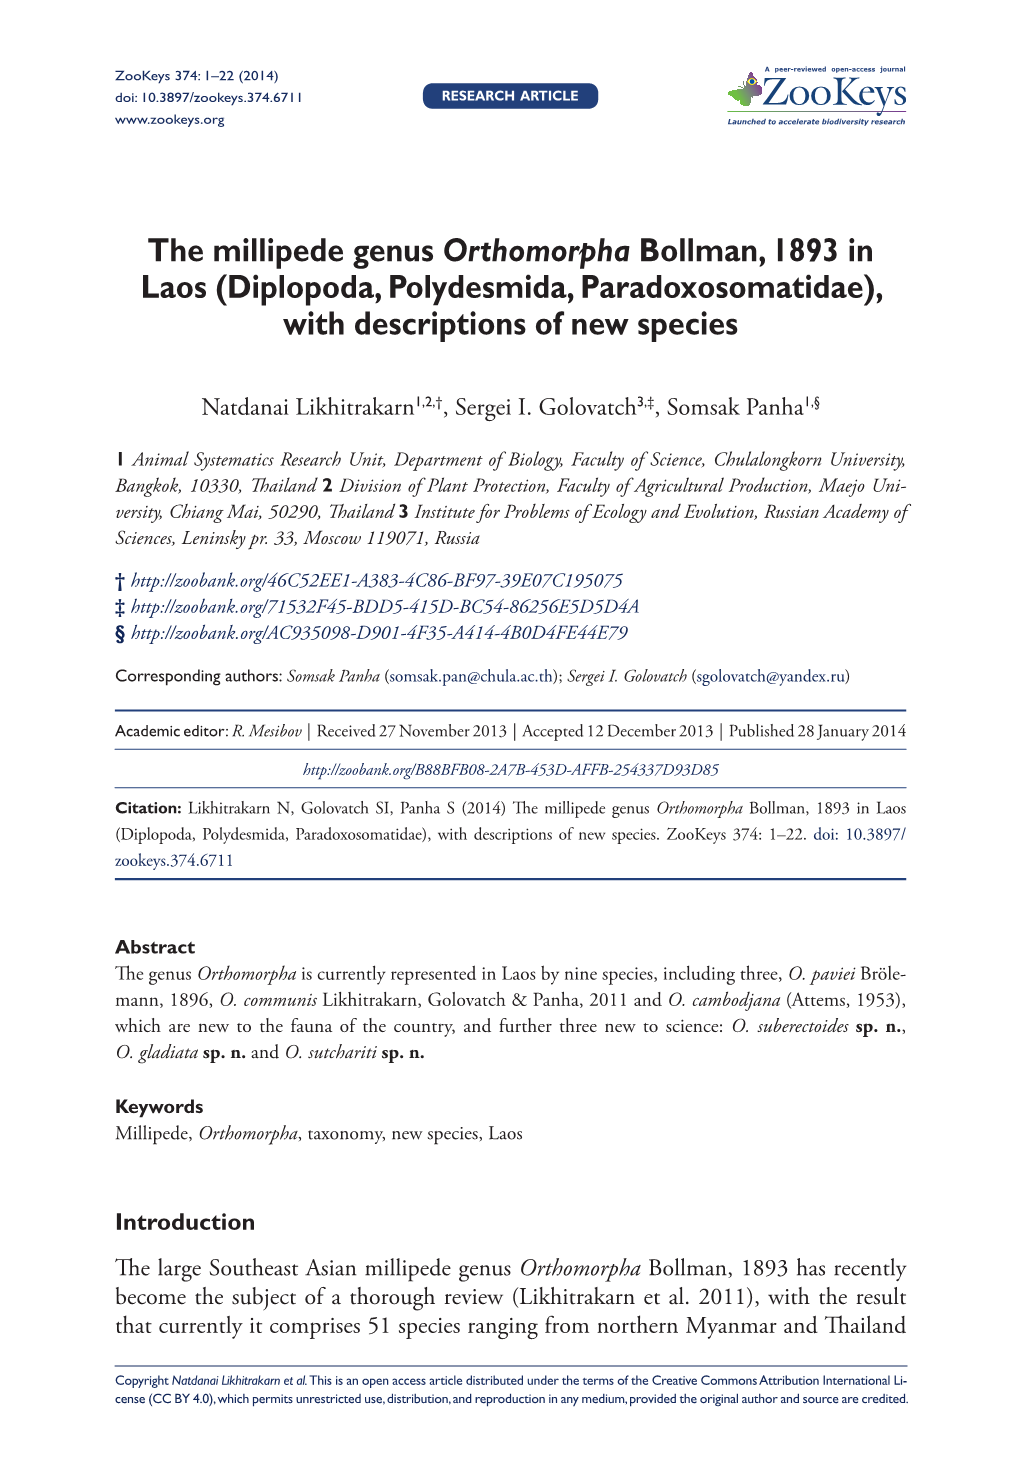 Diplopoda, Polydesmida, Paradoxosomatidae), with Descriptions of New Species